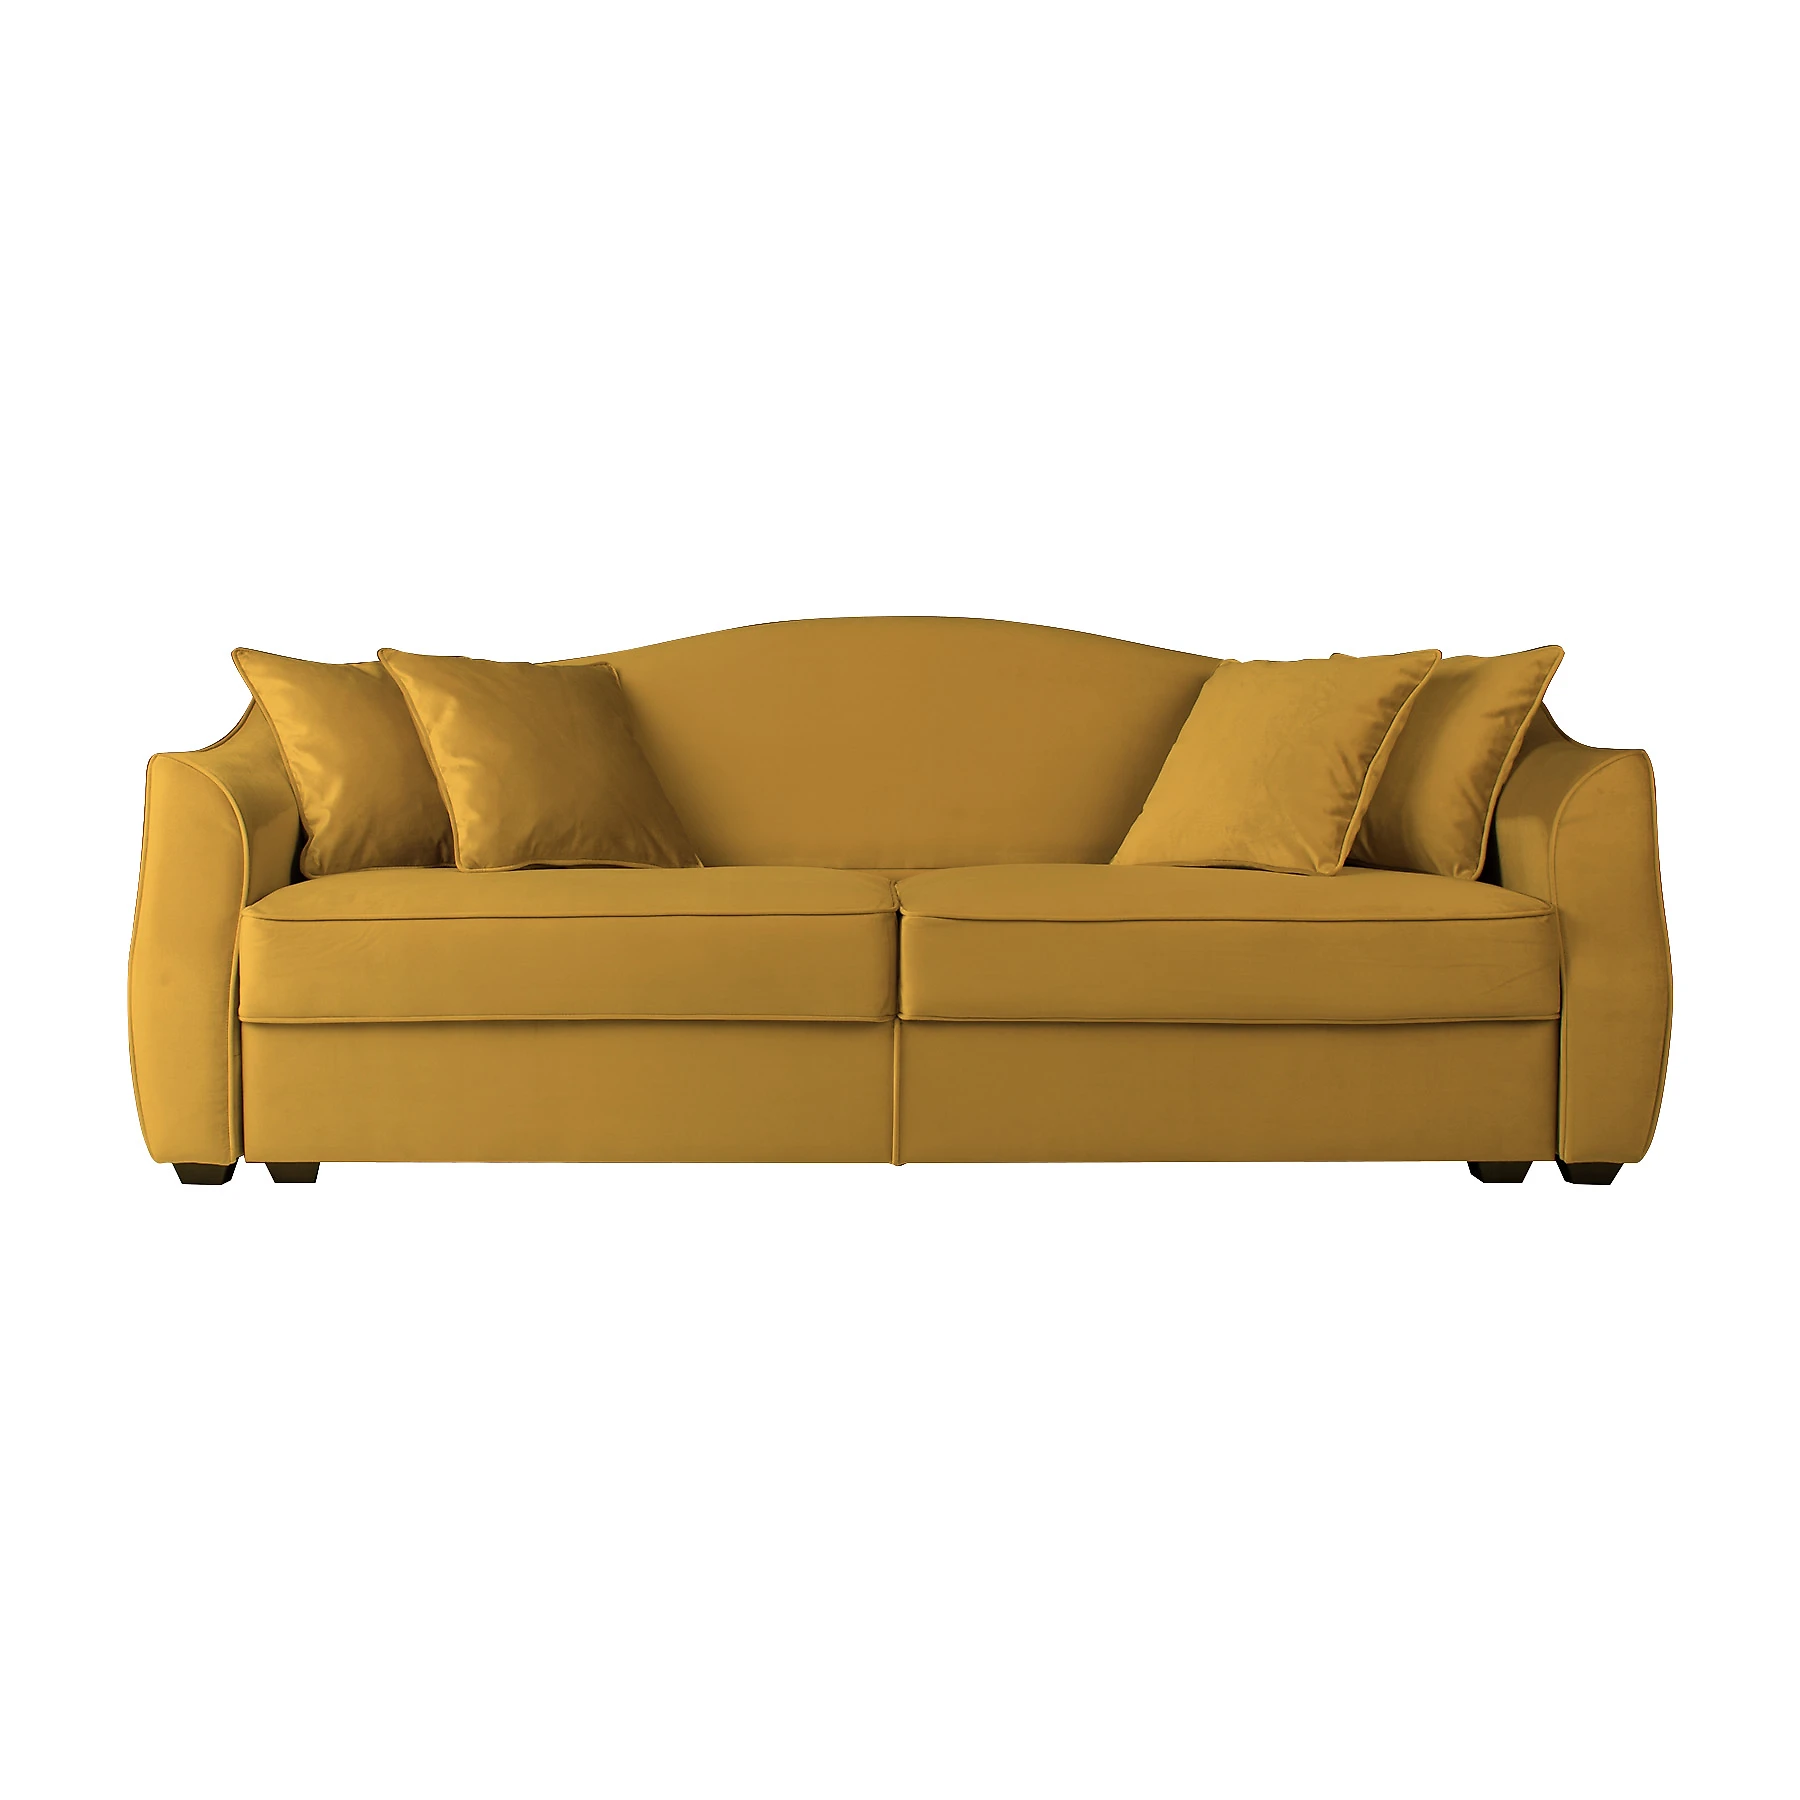 Жёлтый прямой диван Hermes-B 0124,4,2